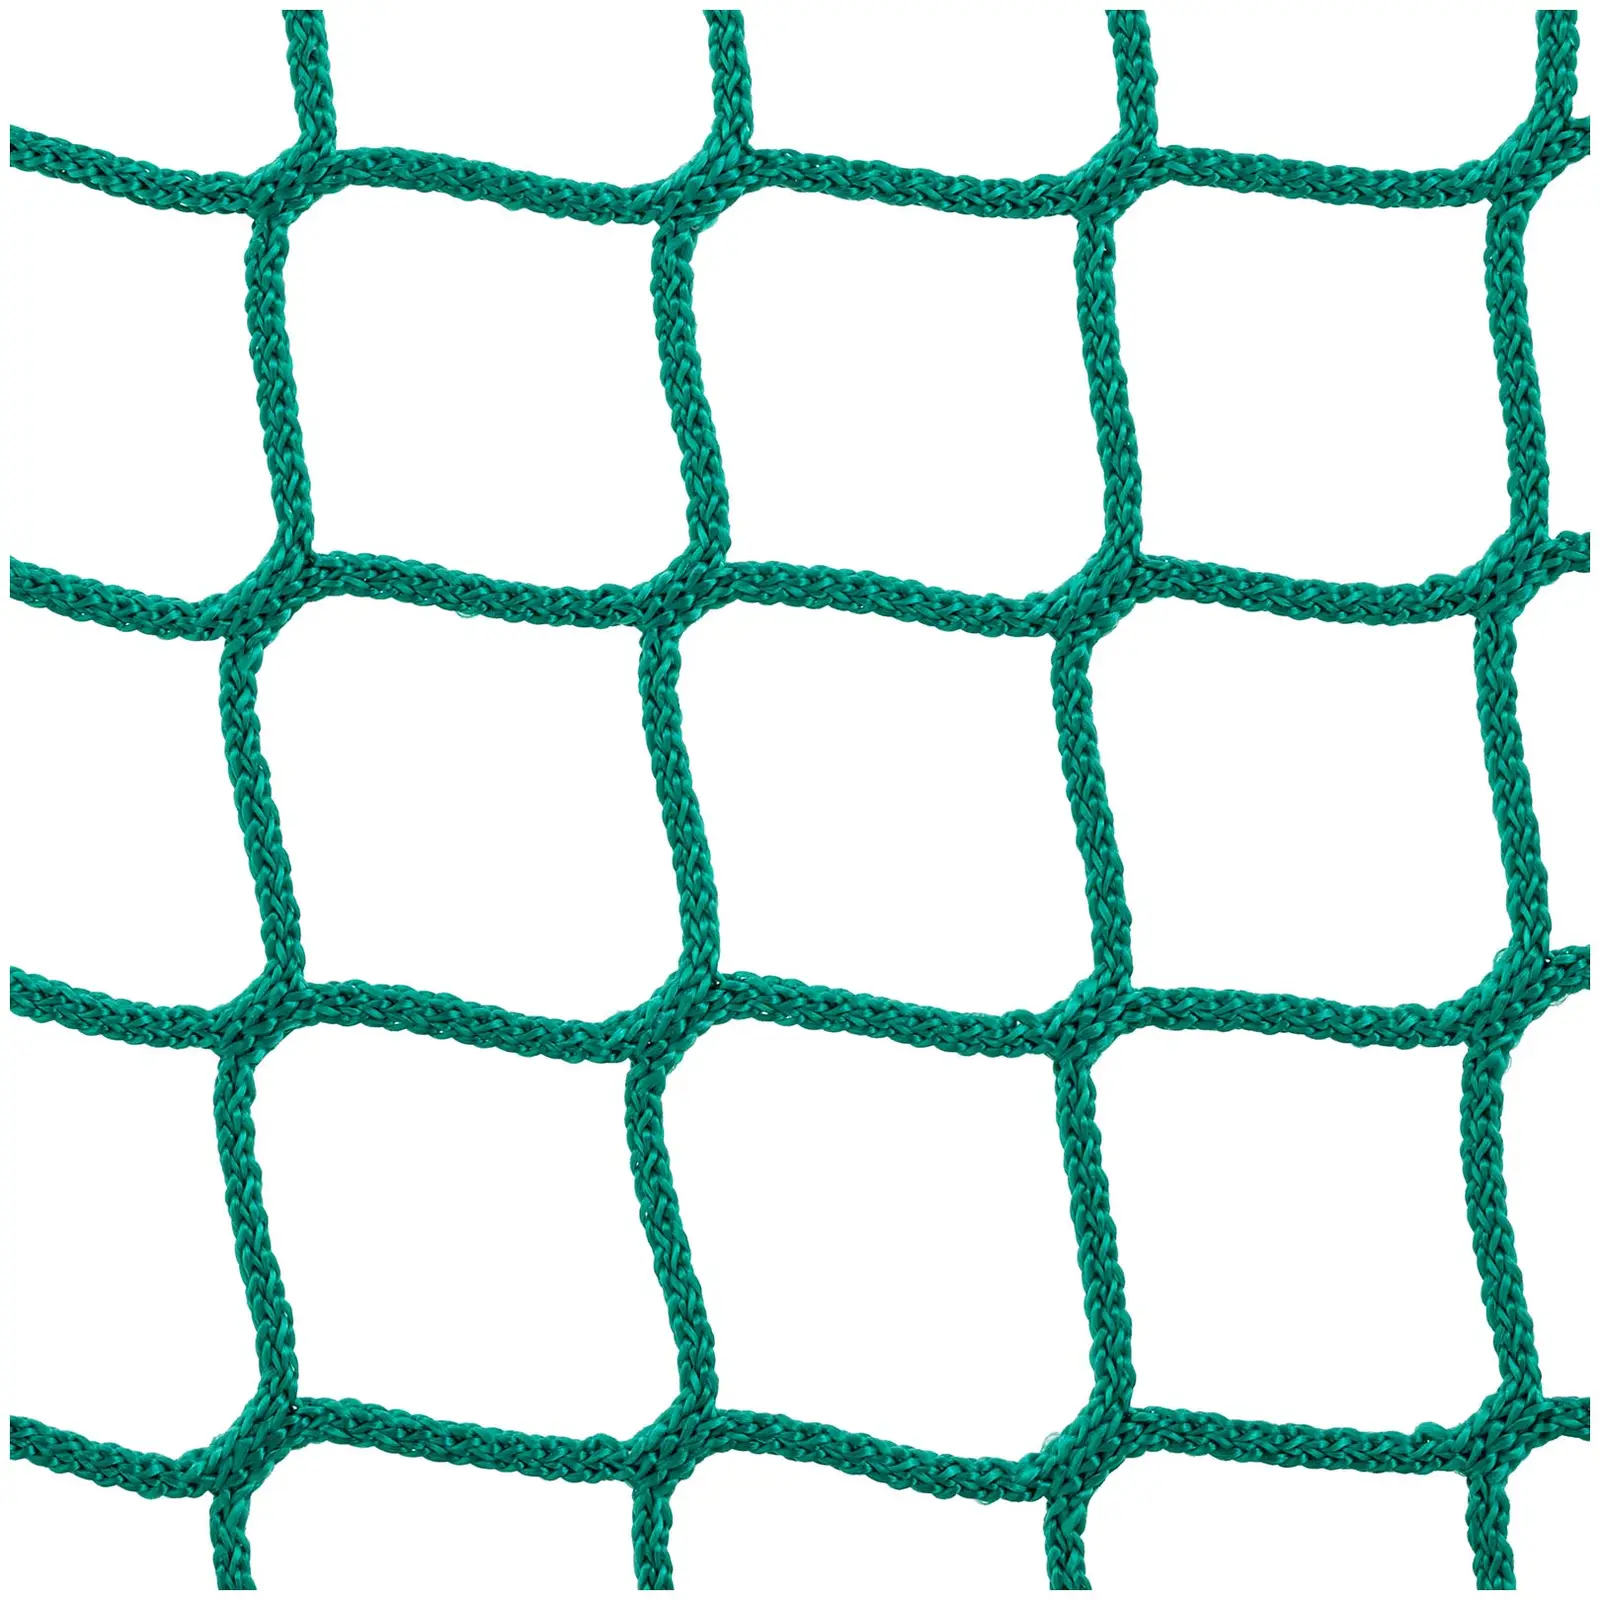 Round Bale Hay Net - 1,600 x 1,600 x 1,800 mm - mesh size: 45 x 45 mm - Green